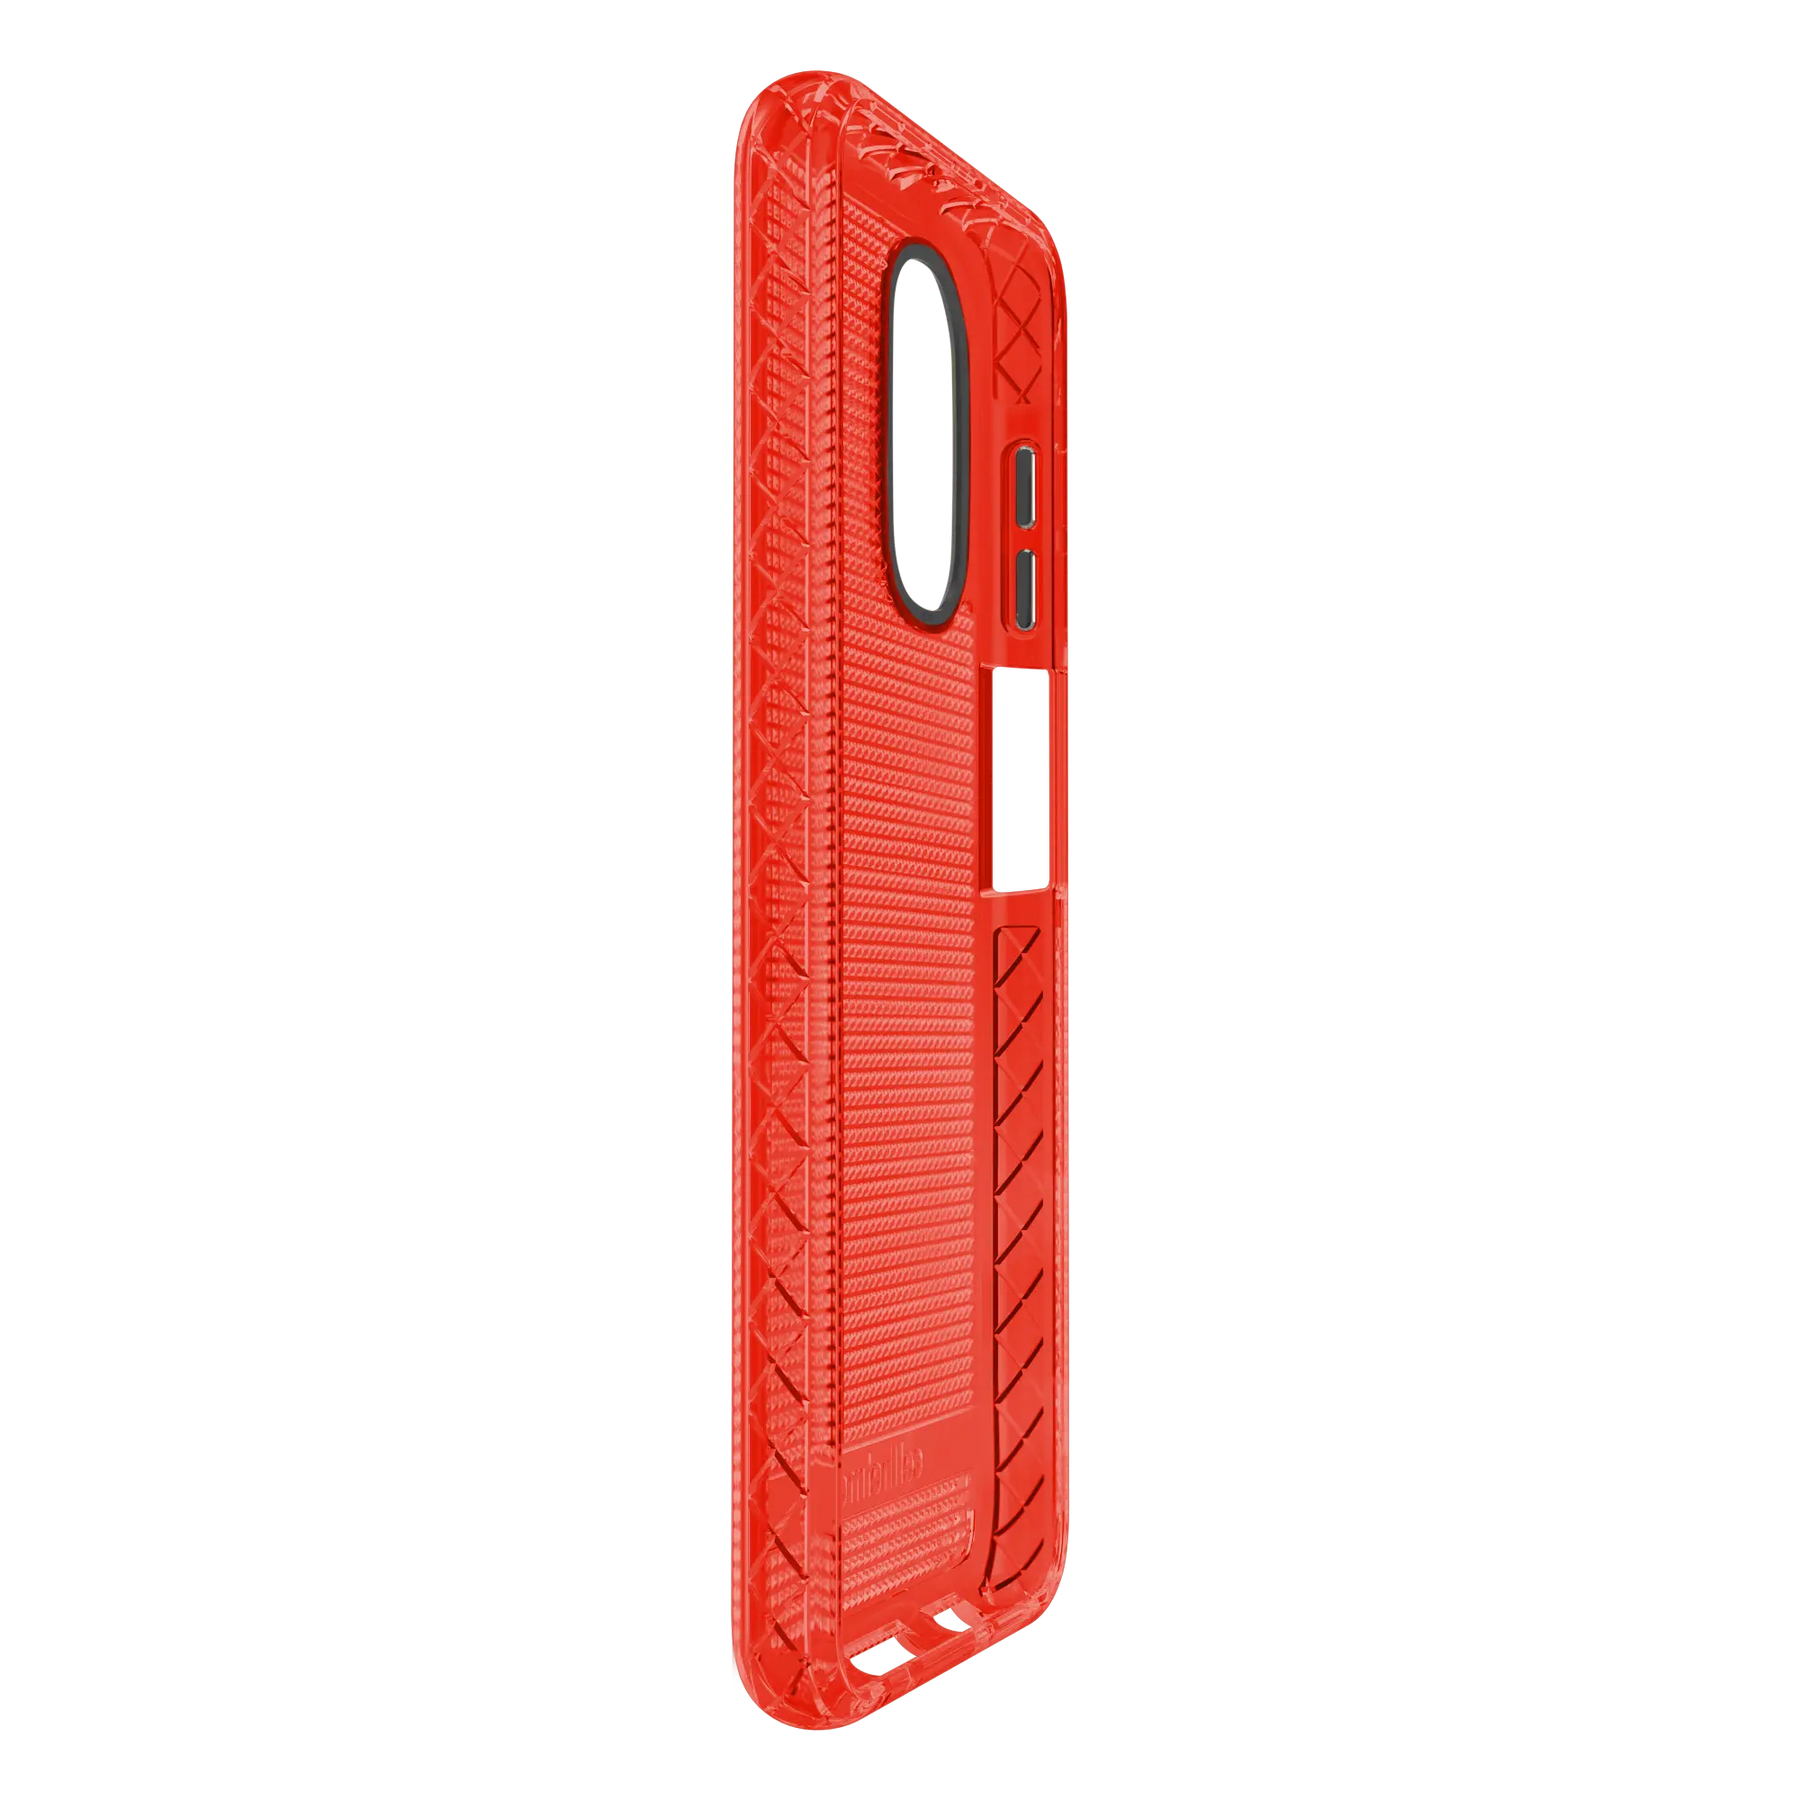 Altitude X Series for Motorola Moto Stylus 4G  - Red - Case -  - cellhelmet